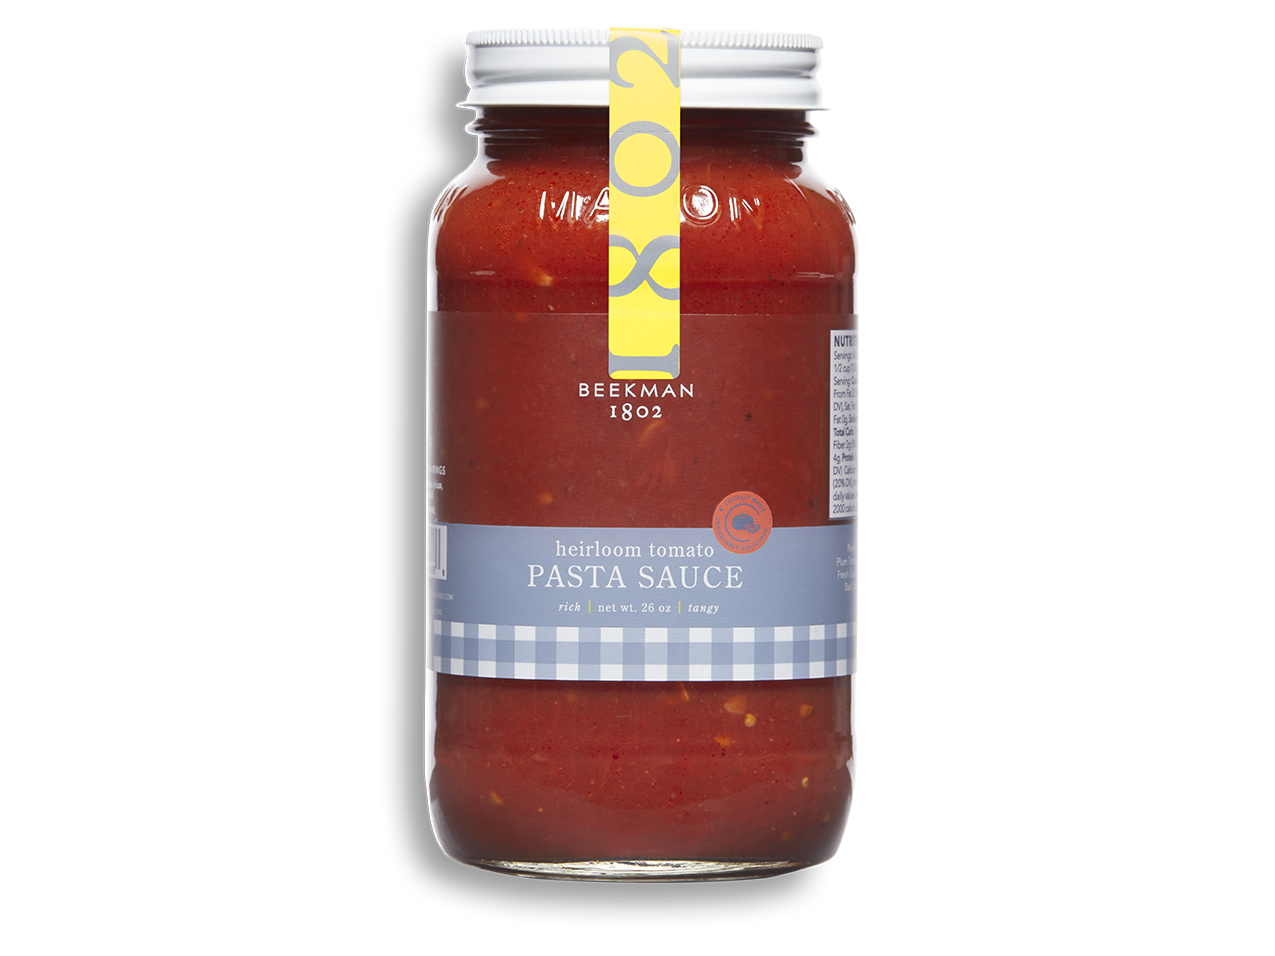 "Mortgage Lifter" Heirloom Tomato Pasta Sauce from Beekman 1802 Farm